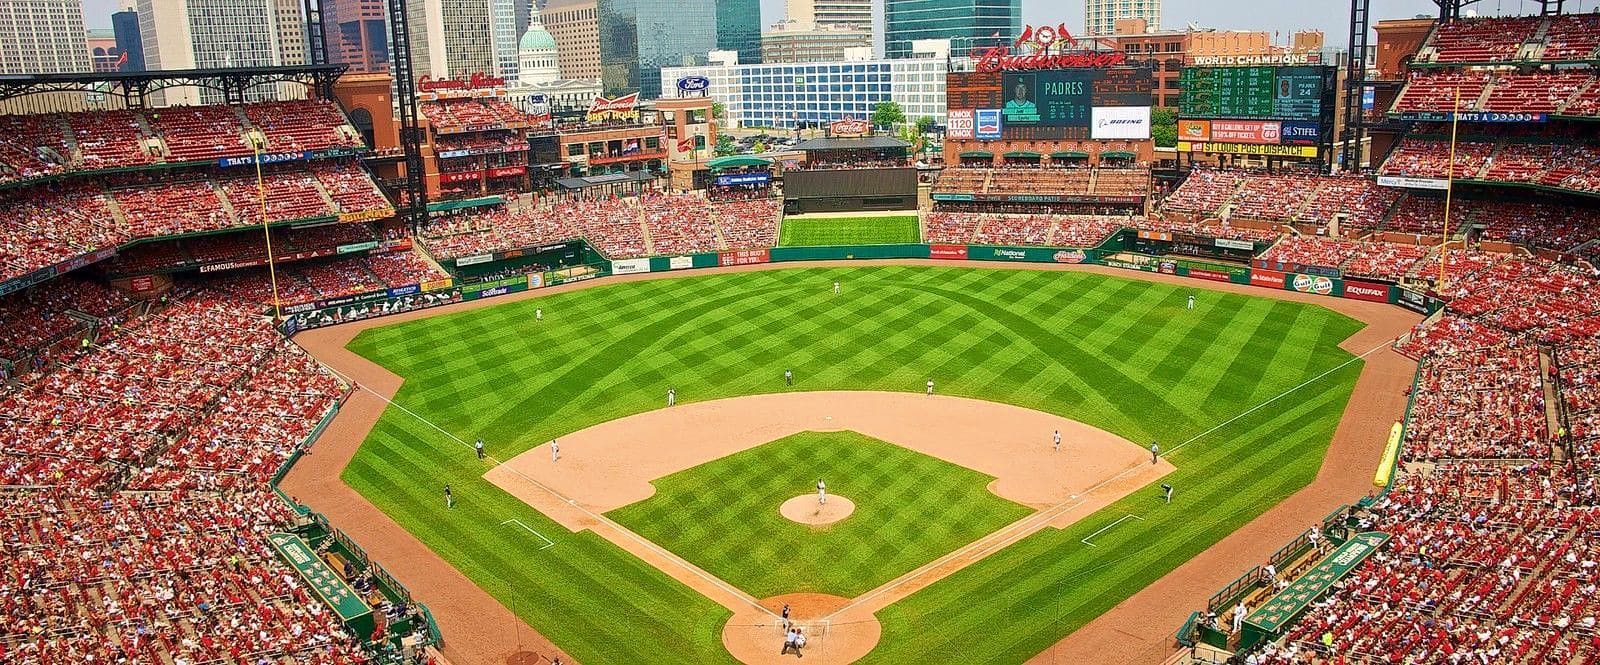 St. Louis Cardinals vs Baltimore Orioles [4/2/2020] Tickets - StubHub!